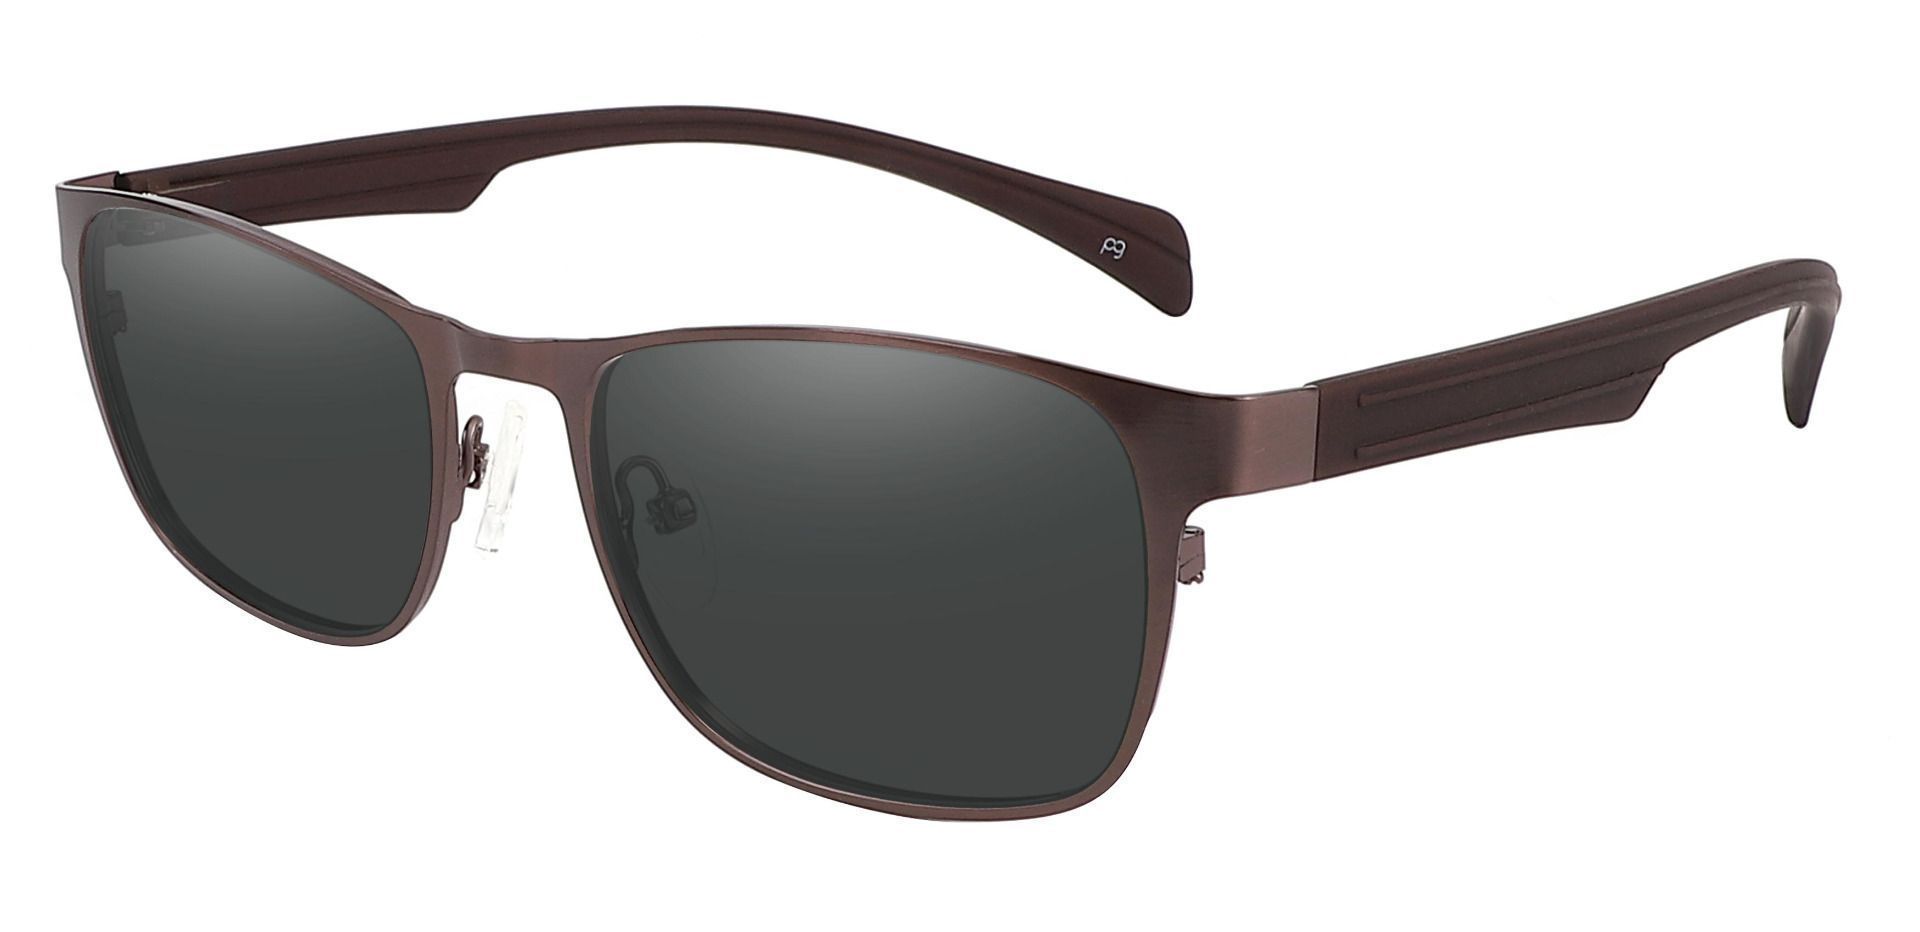 Duncan Rectangle Prescription Sunglasses - Brown Frame With Gray Lenses